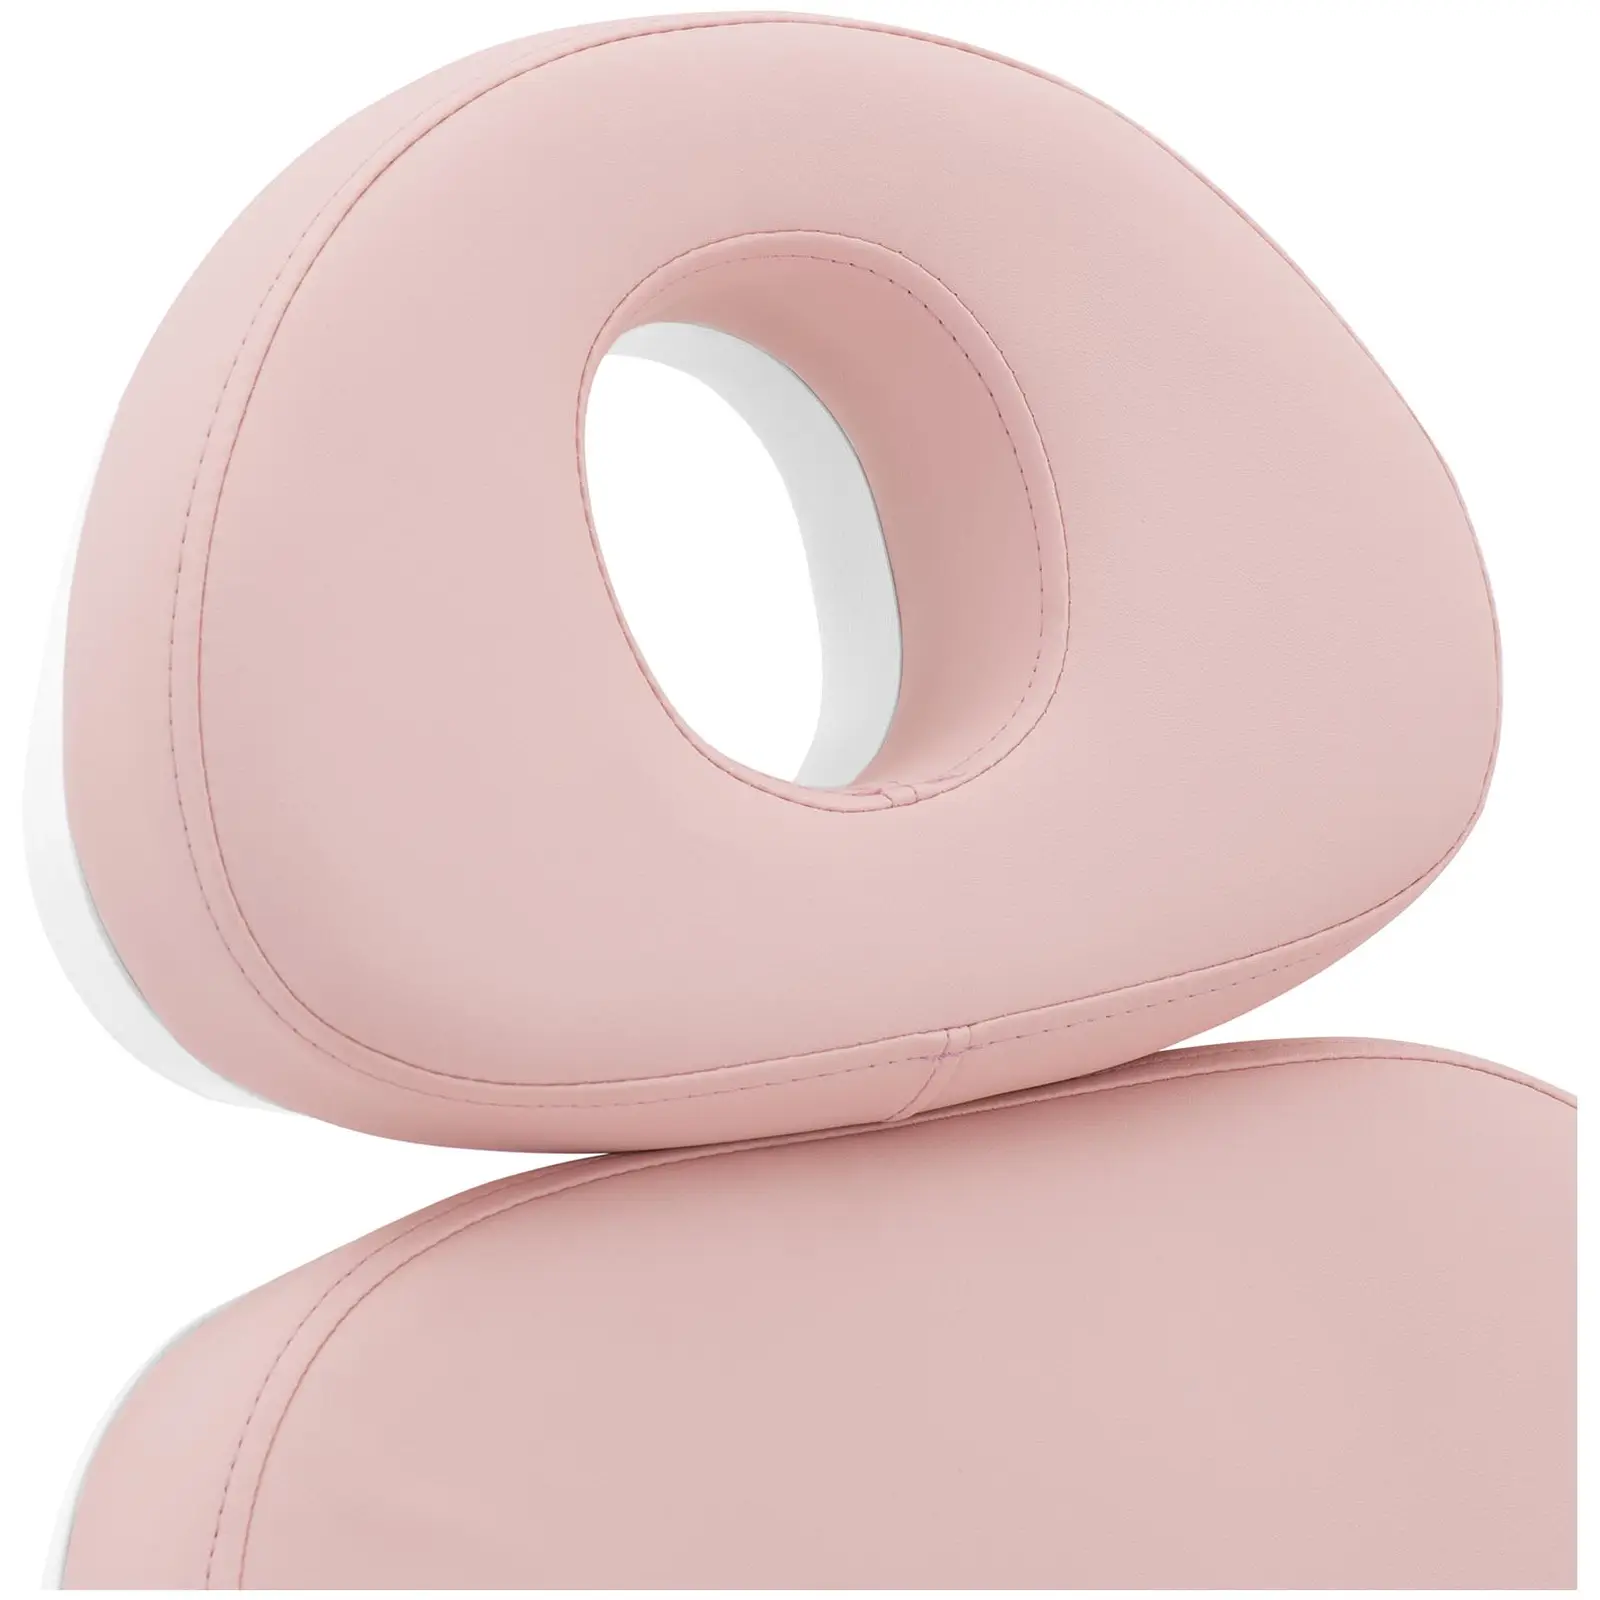 Poltrona pedicure - 200 W - 150 kg - Rosa, Bianco